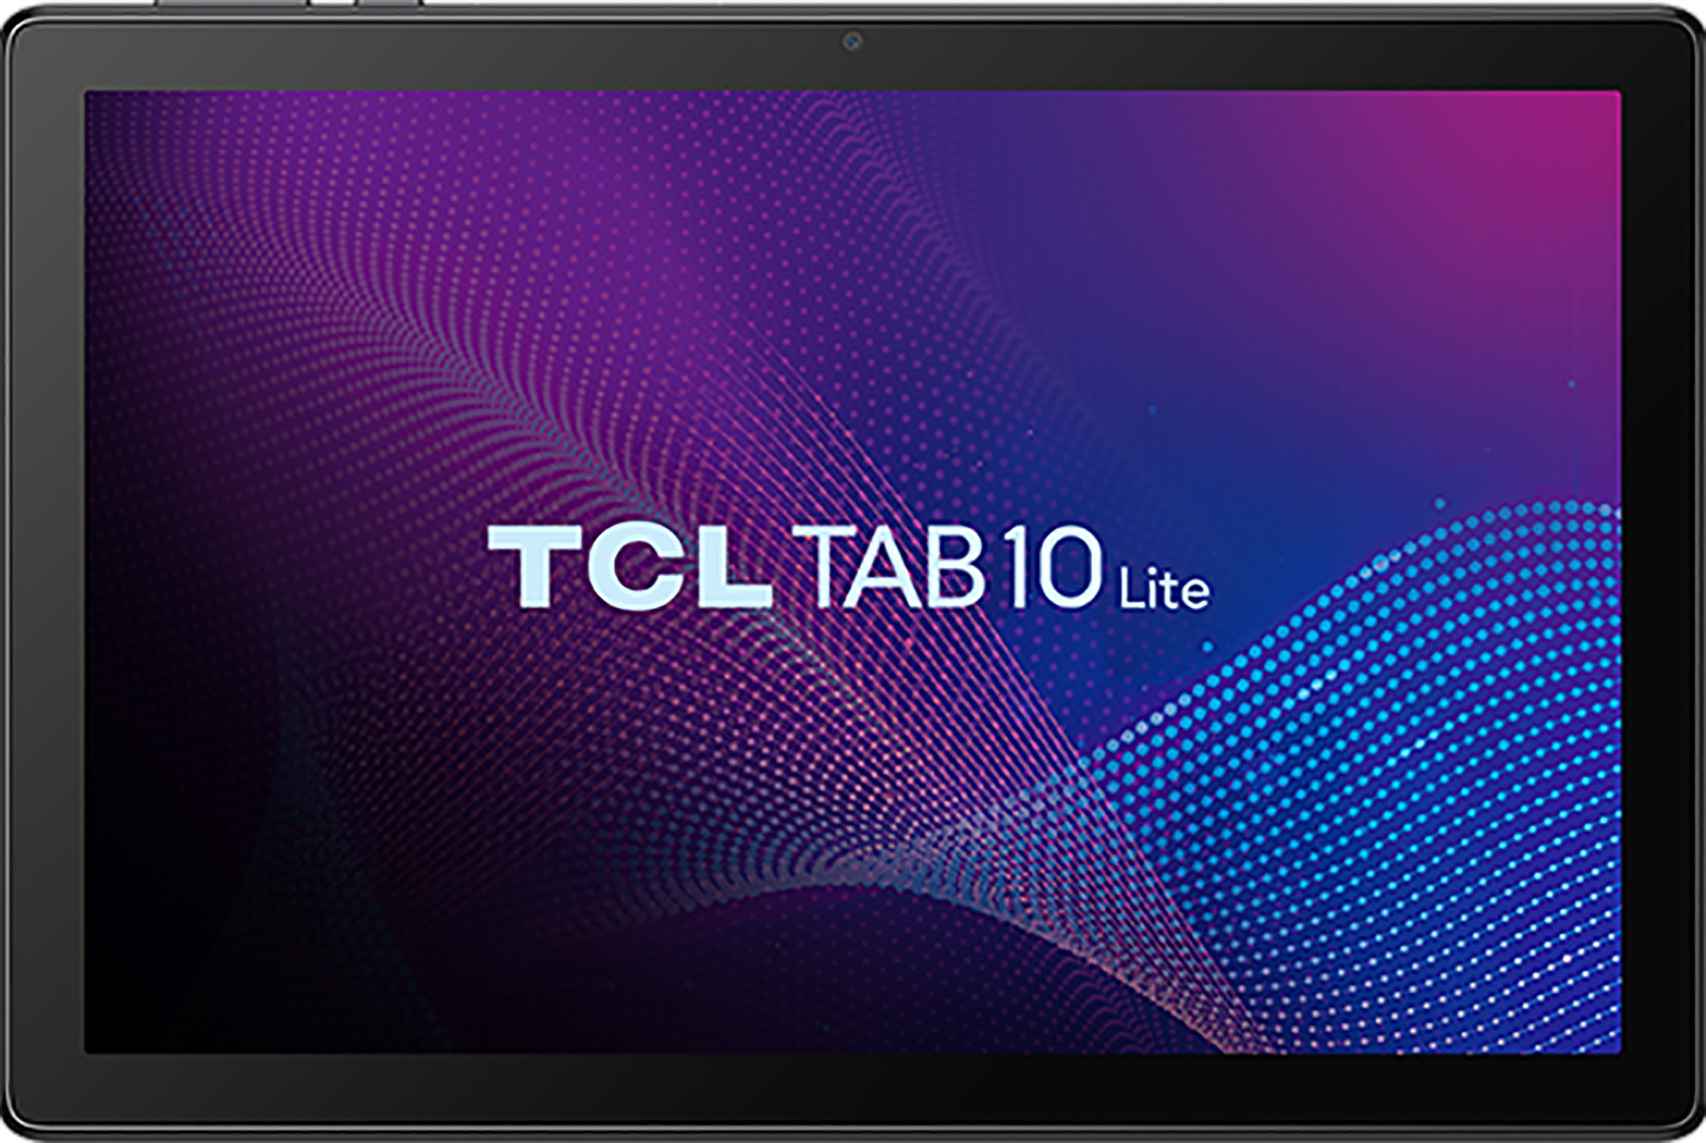 TCL Tab 10 Lite